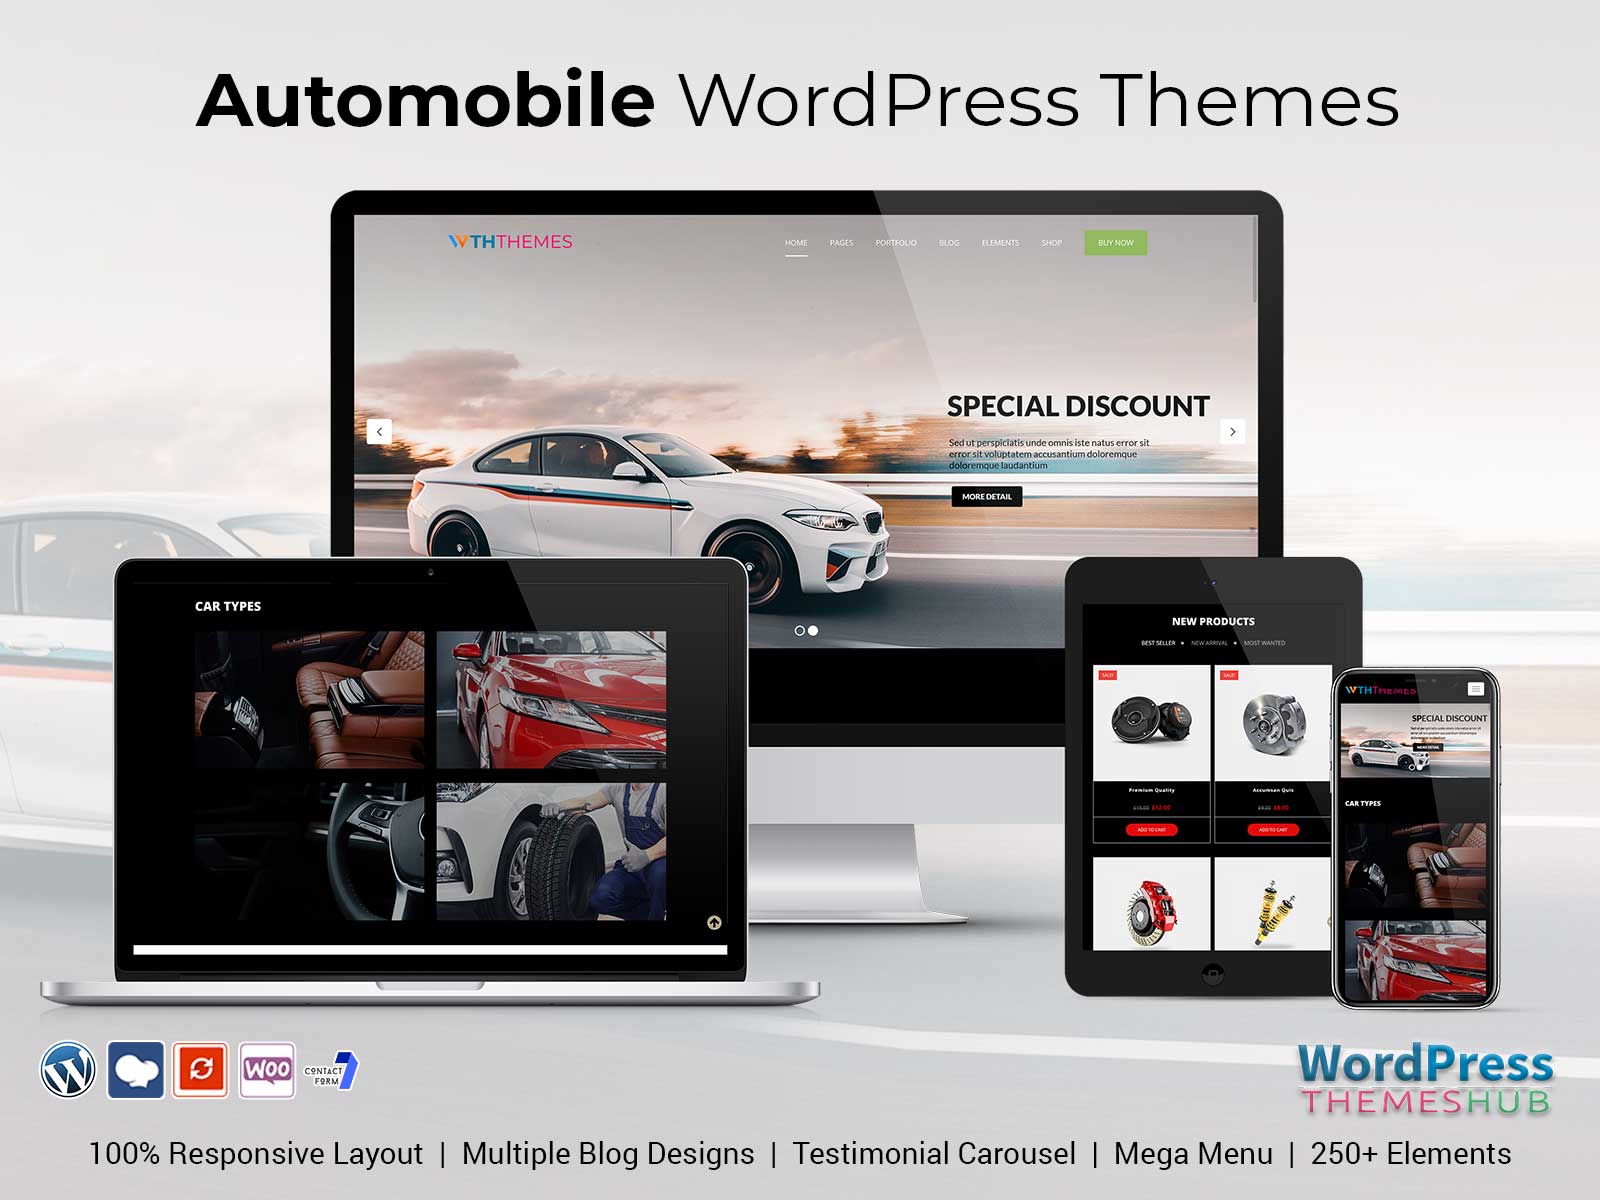 Best Automobile WordPress Theme For Car Dealership